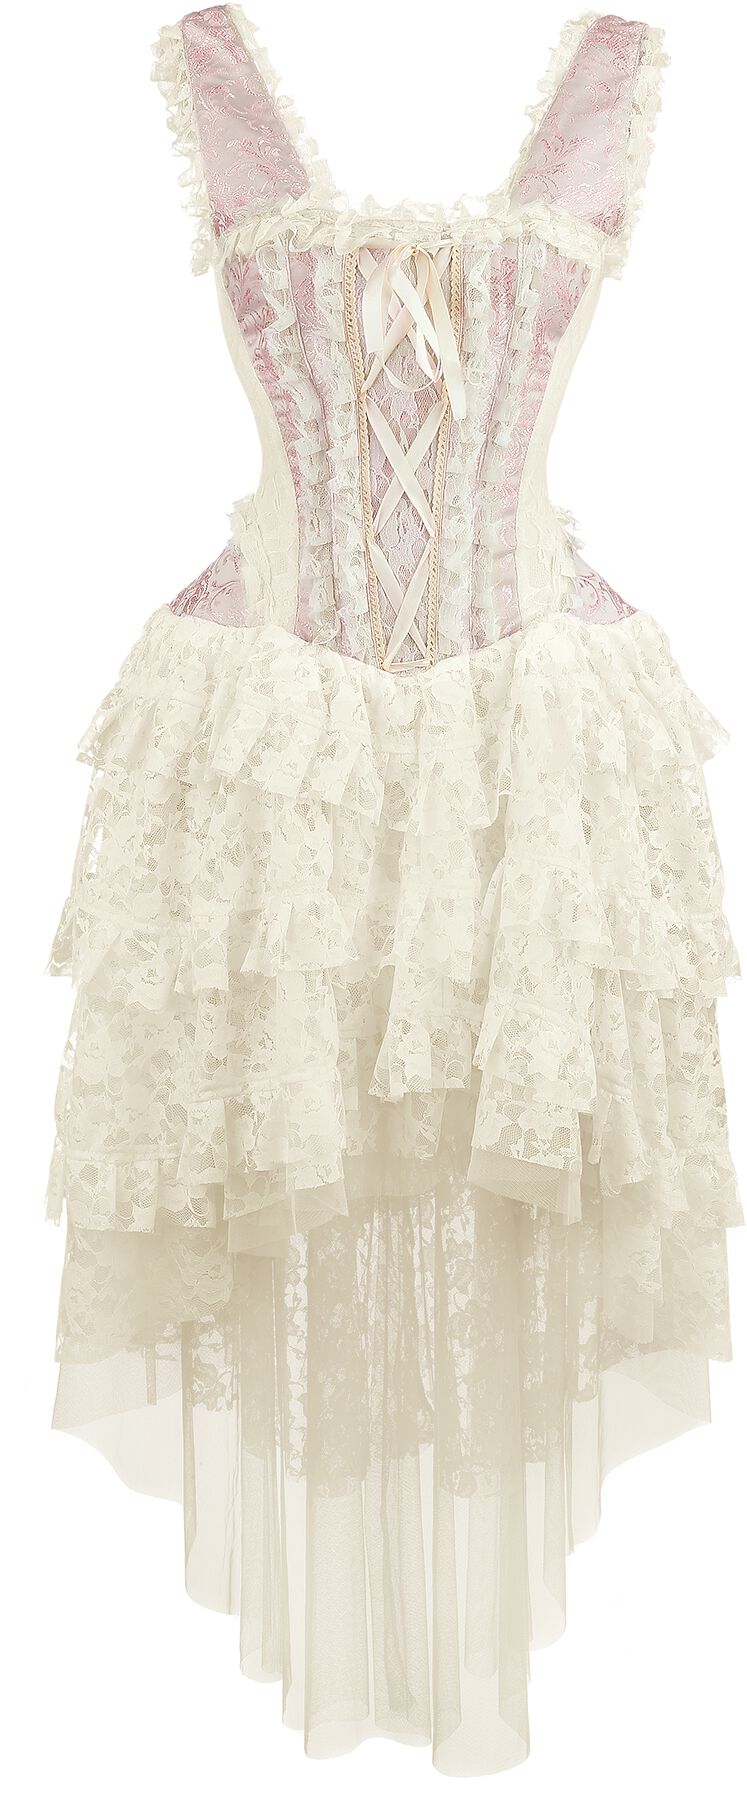 Image of Abito lungo Gothic di Burleska - Ophelie Dress - S a 3XL - Donna - rosa pallido